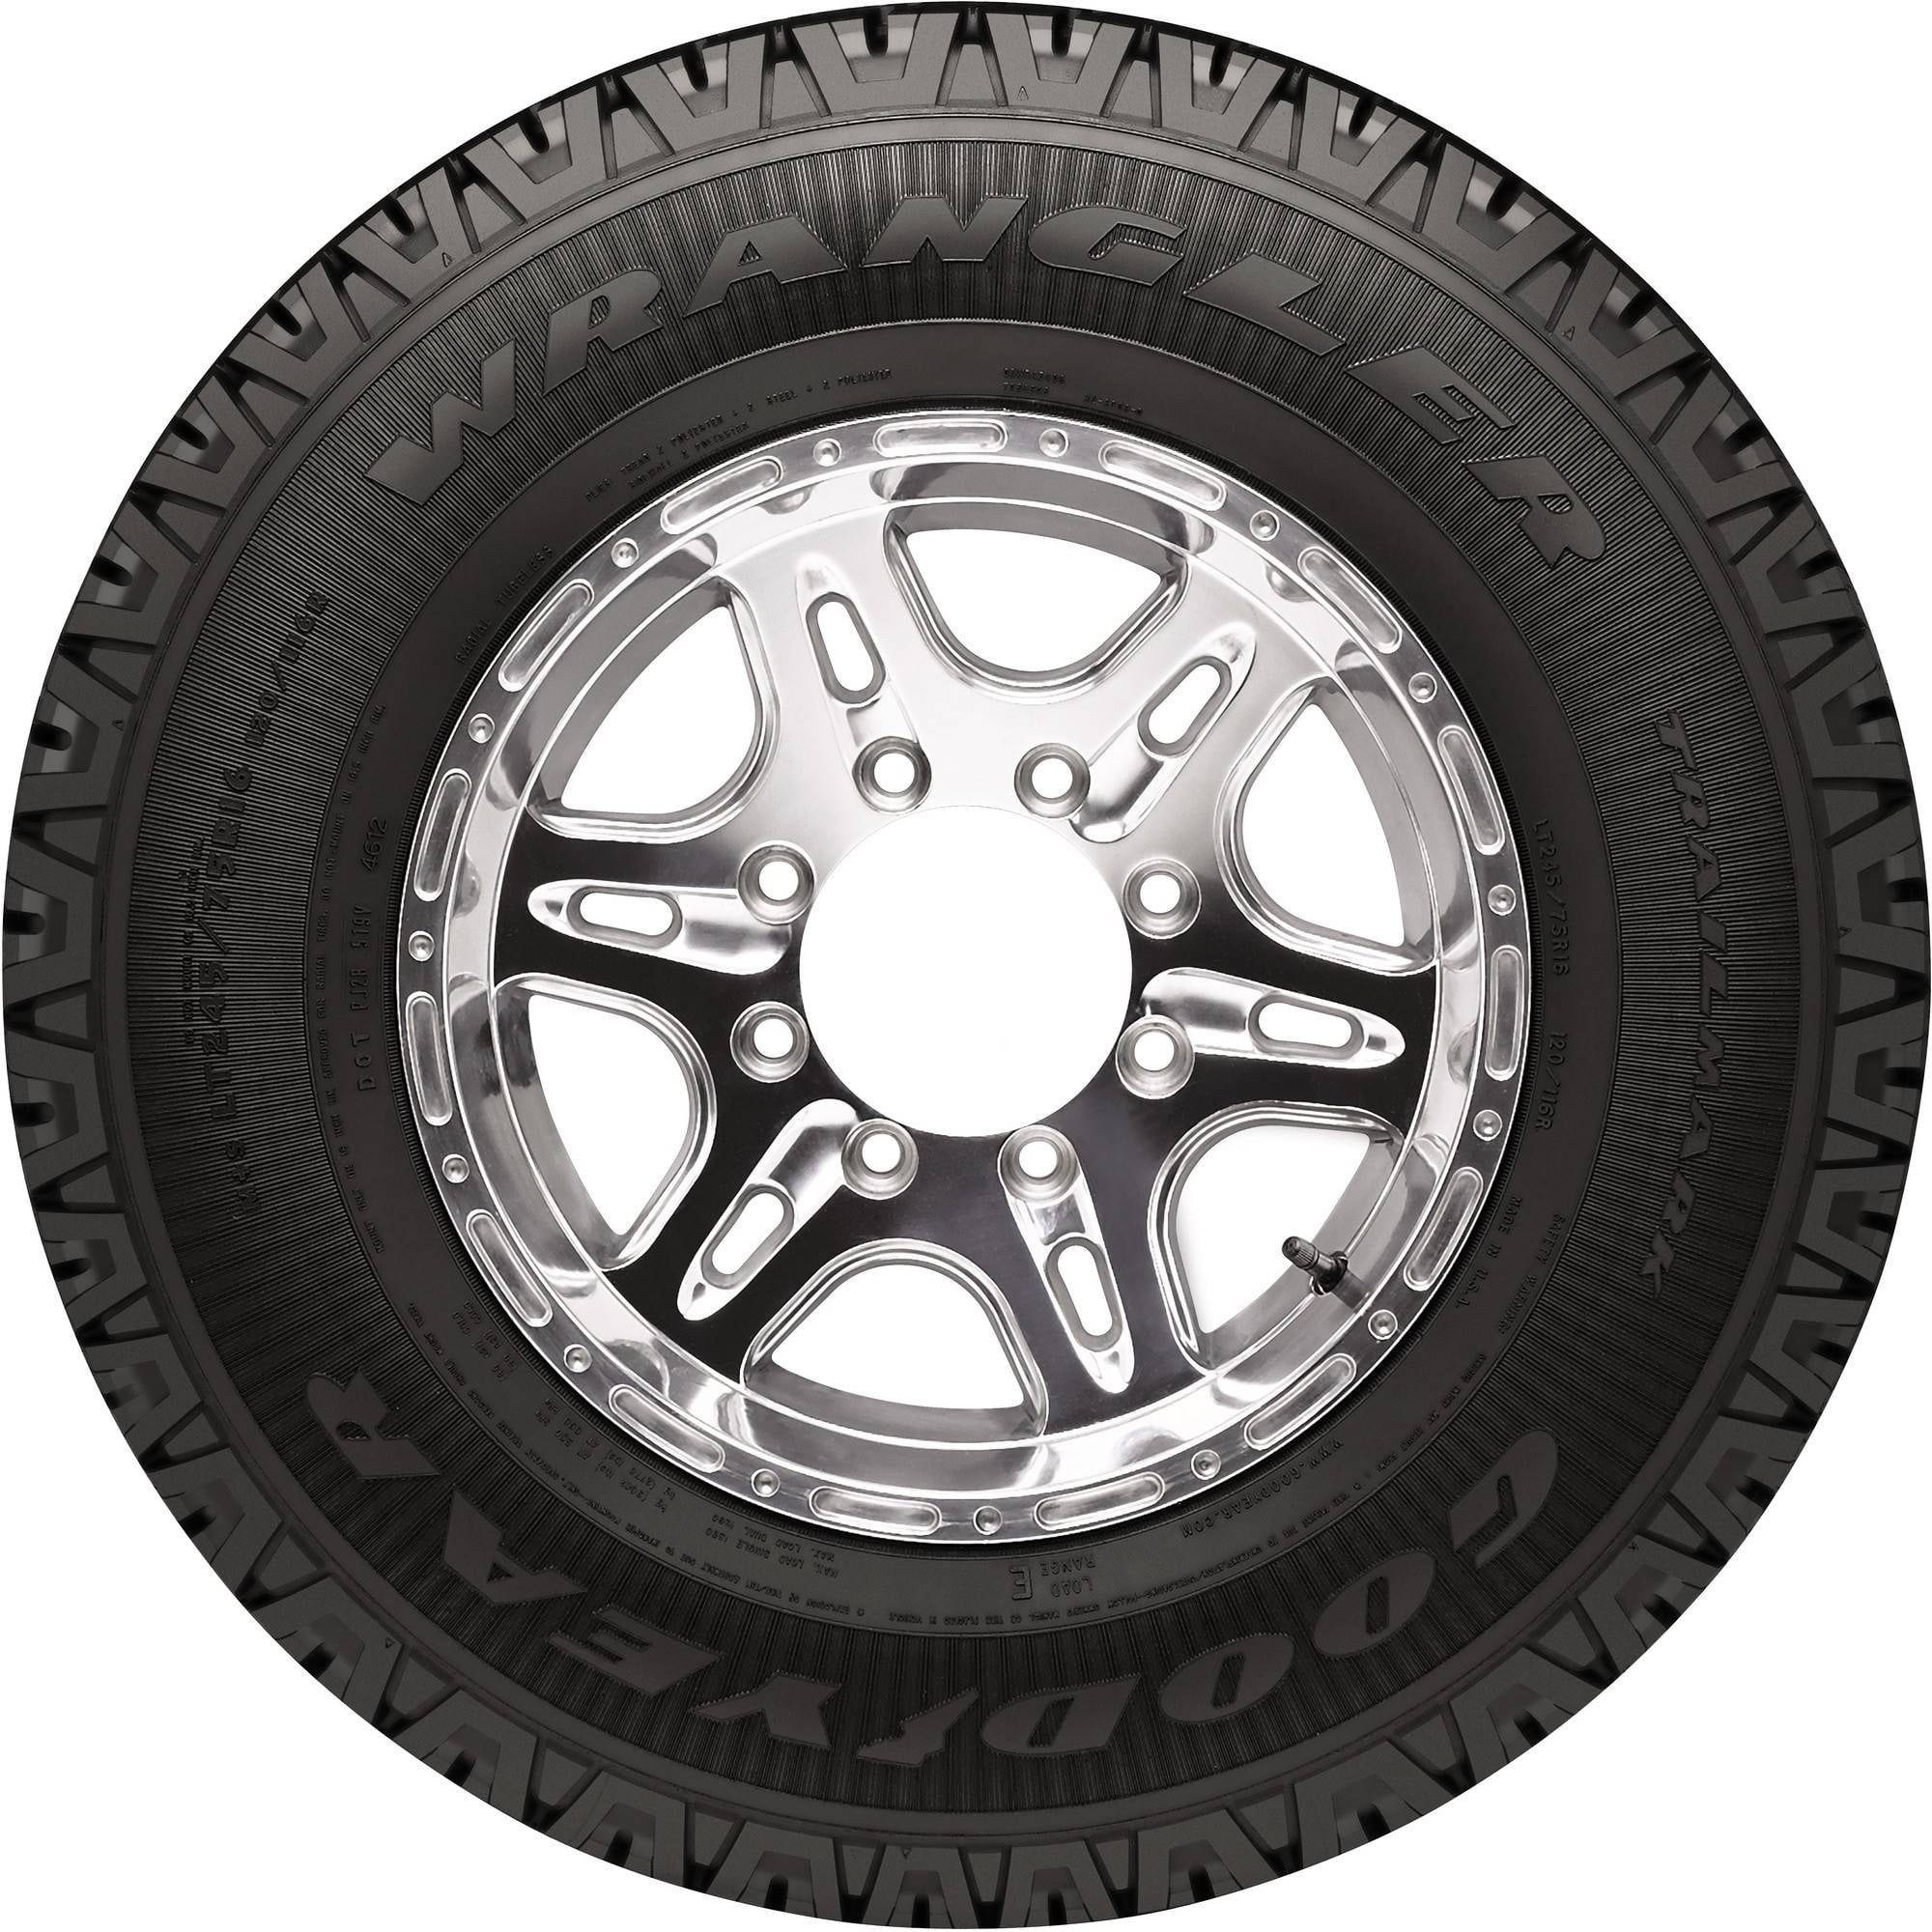 Goodyear Wrangler Trailmark 245/65R17 105T All-Season Tire 